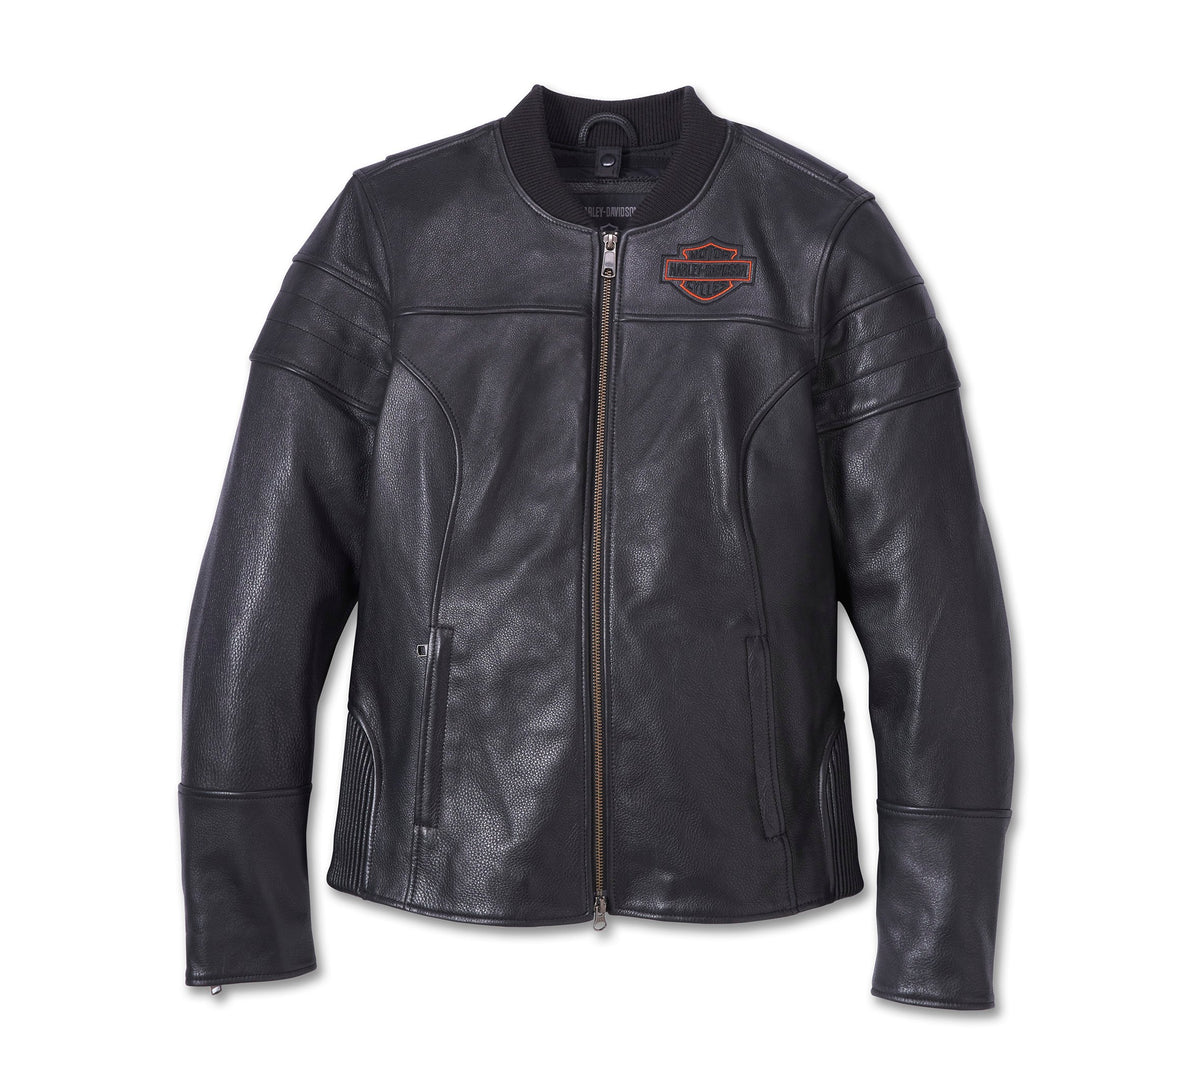 Harley-Davidson Women's 120th Anniversary D-Pocket Biker Leather Jacket 